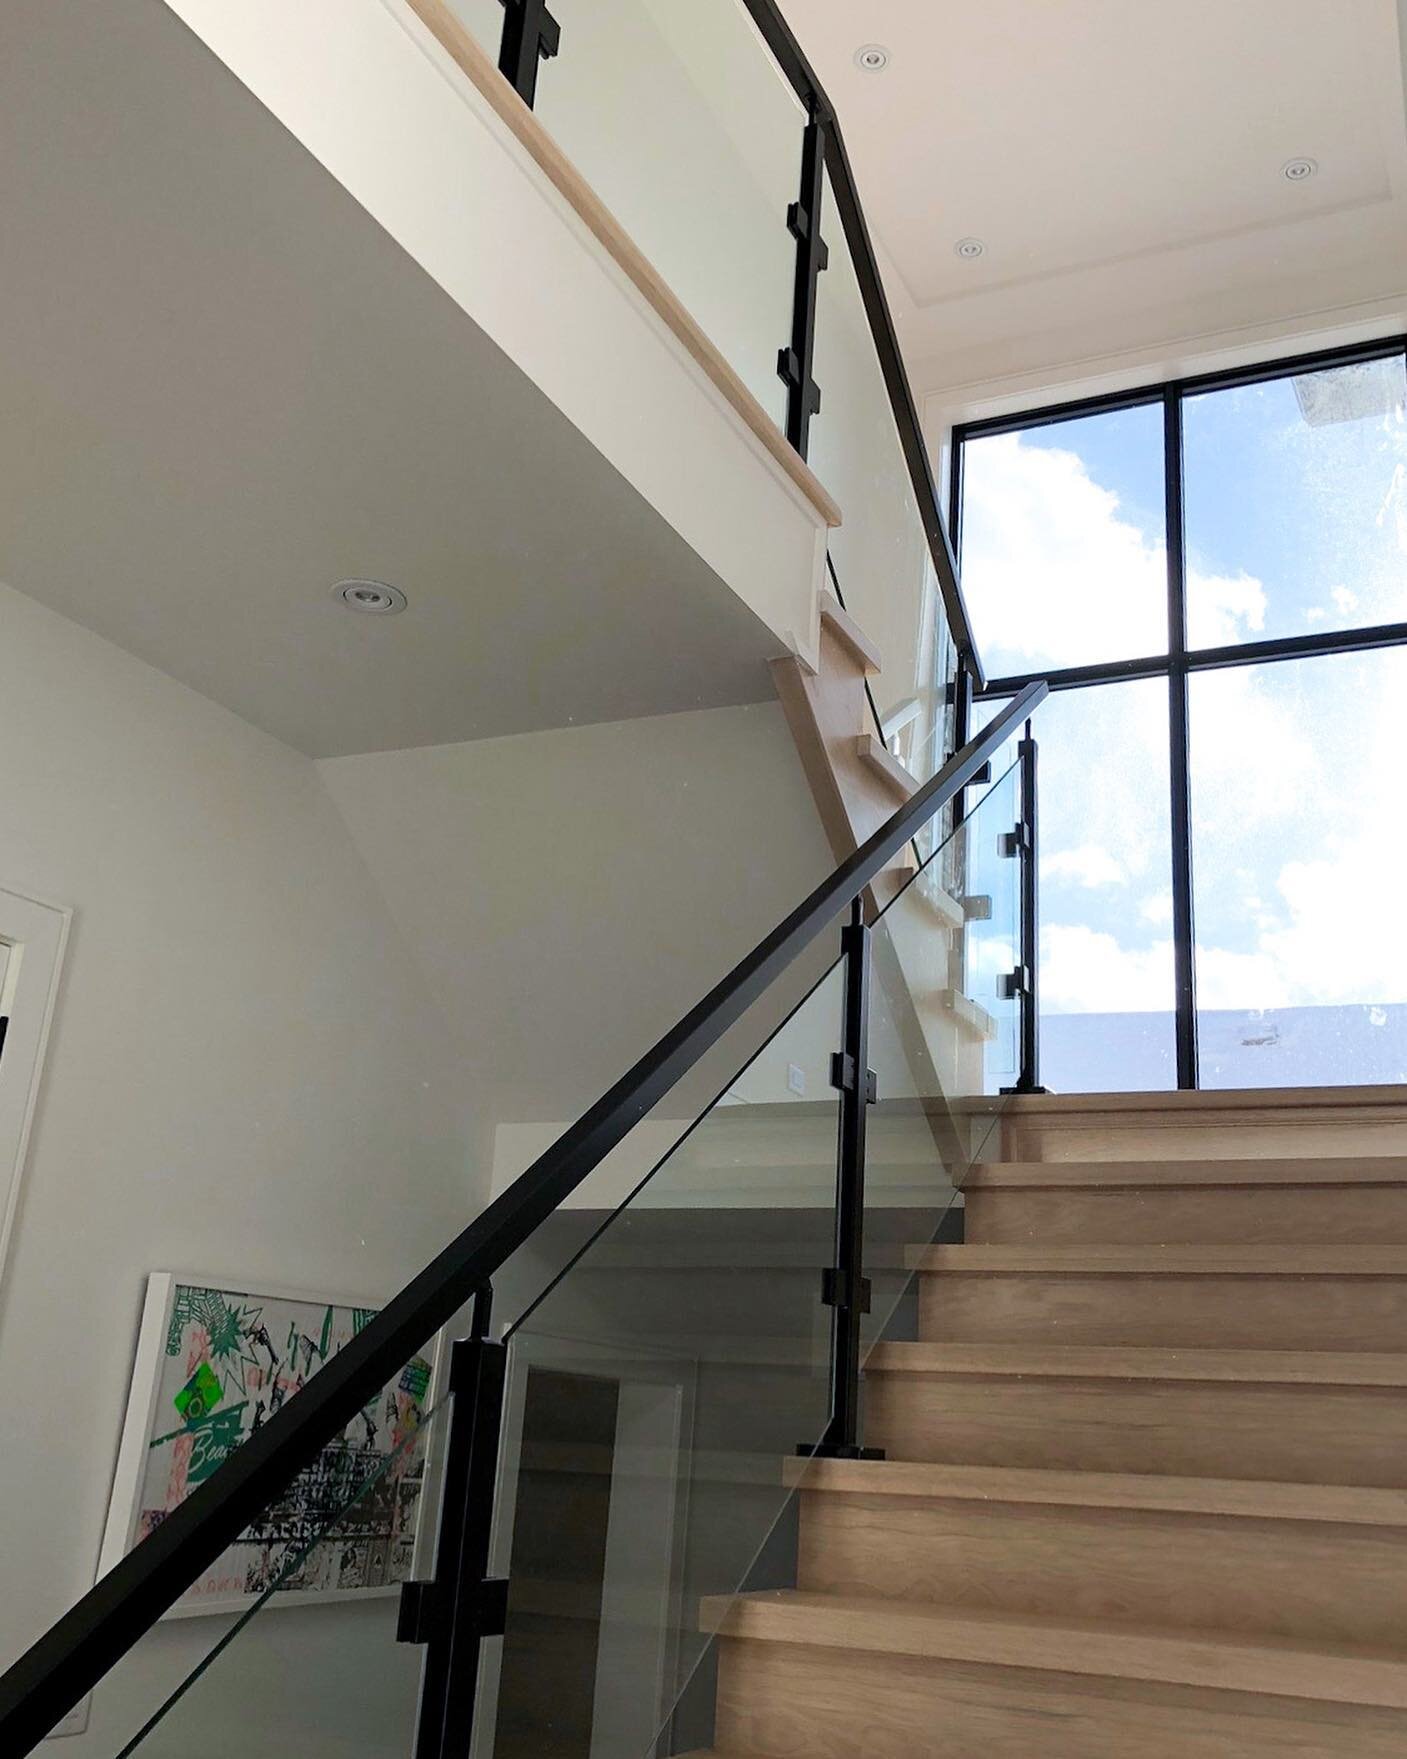 Modern staircase, glass railings and blue skies! ☁️💙

 #ossingtonhomes #designbuild #torontobuilder #glassrailings #stairs